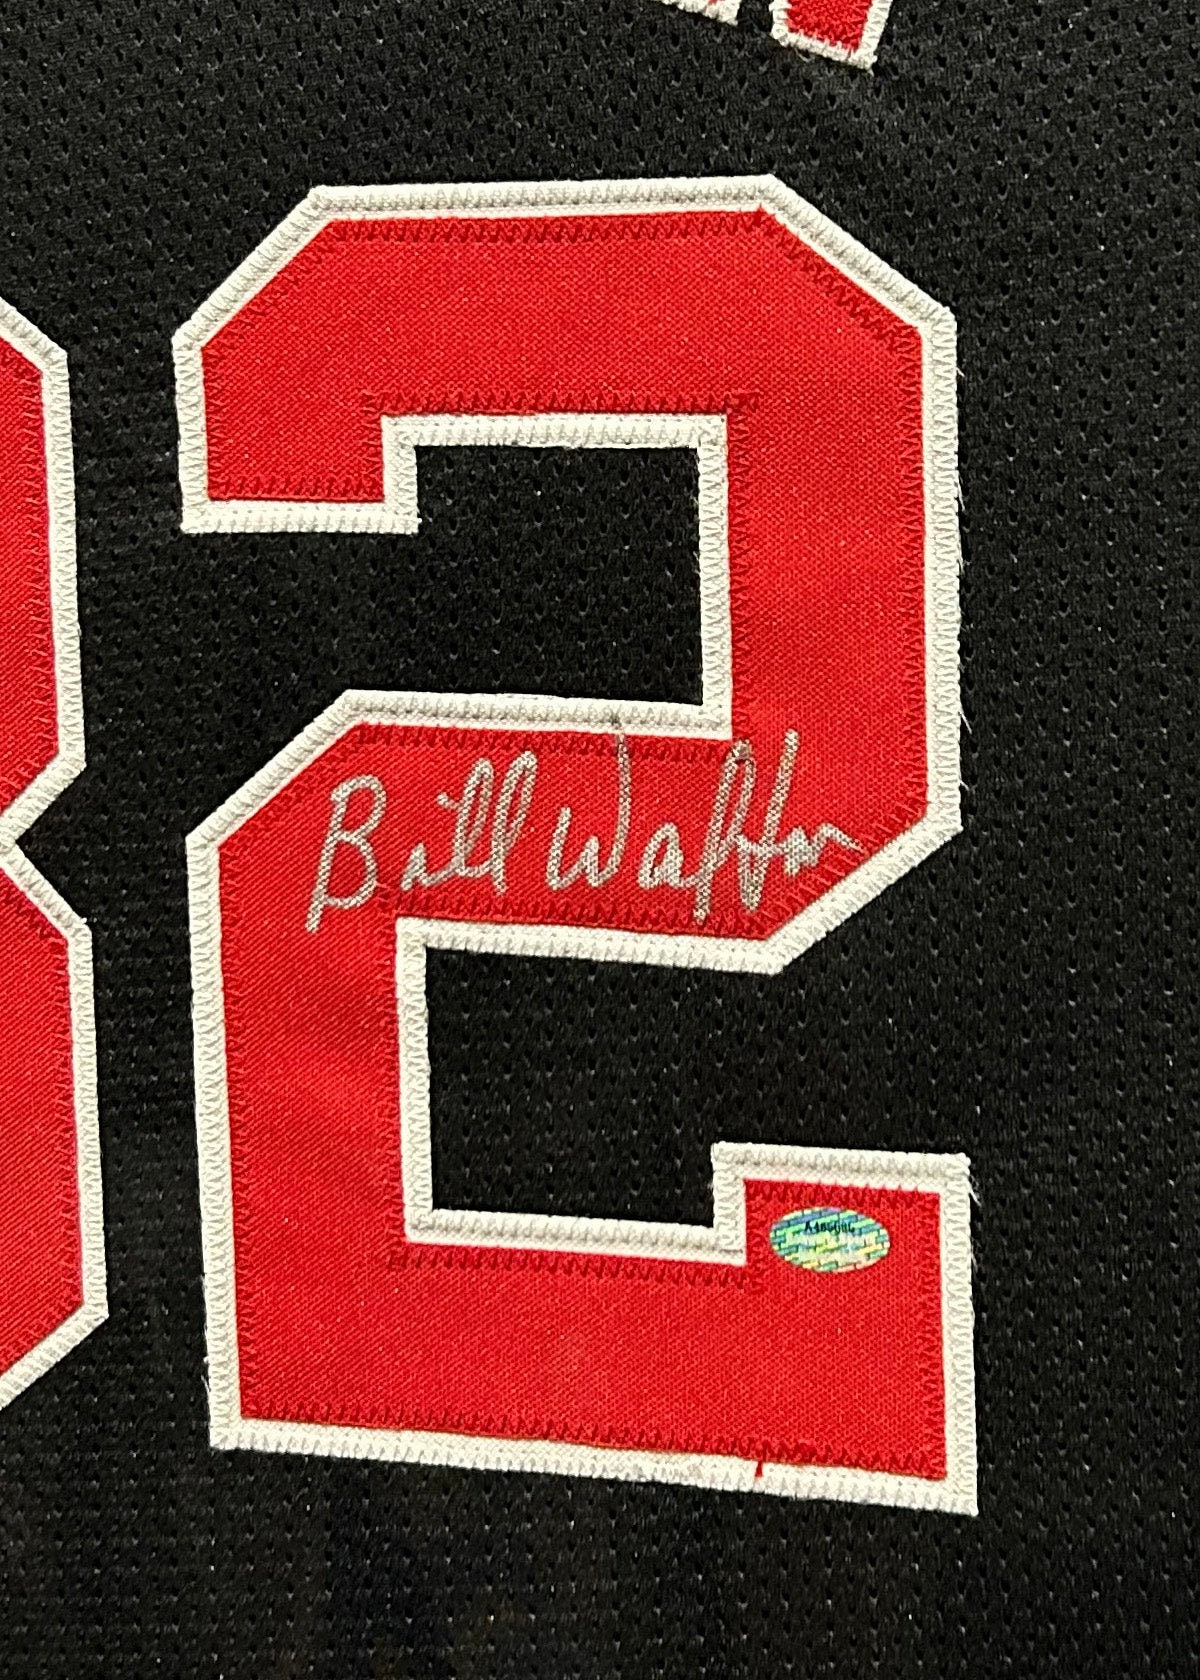 Bill Walton Framed Signed Jersey Schwartz Autographed Portland Trailbl